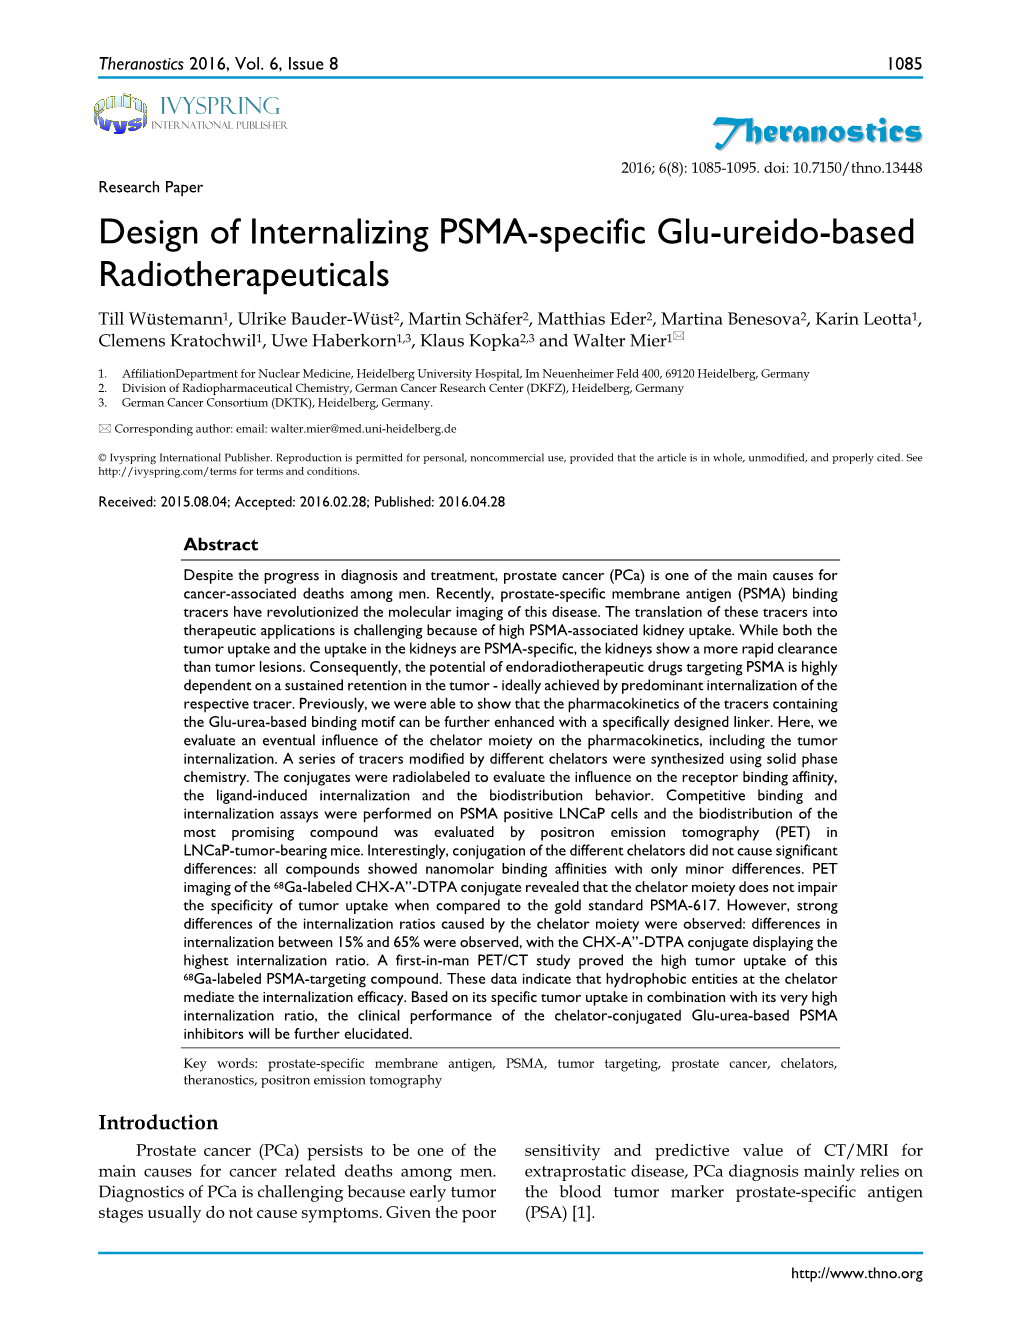 Design of Internalizing PSMA-Specific Glu-Ureido-Based